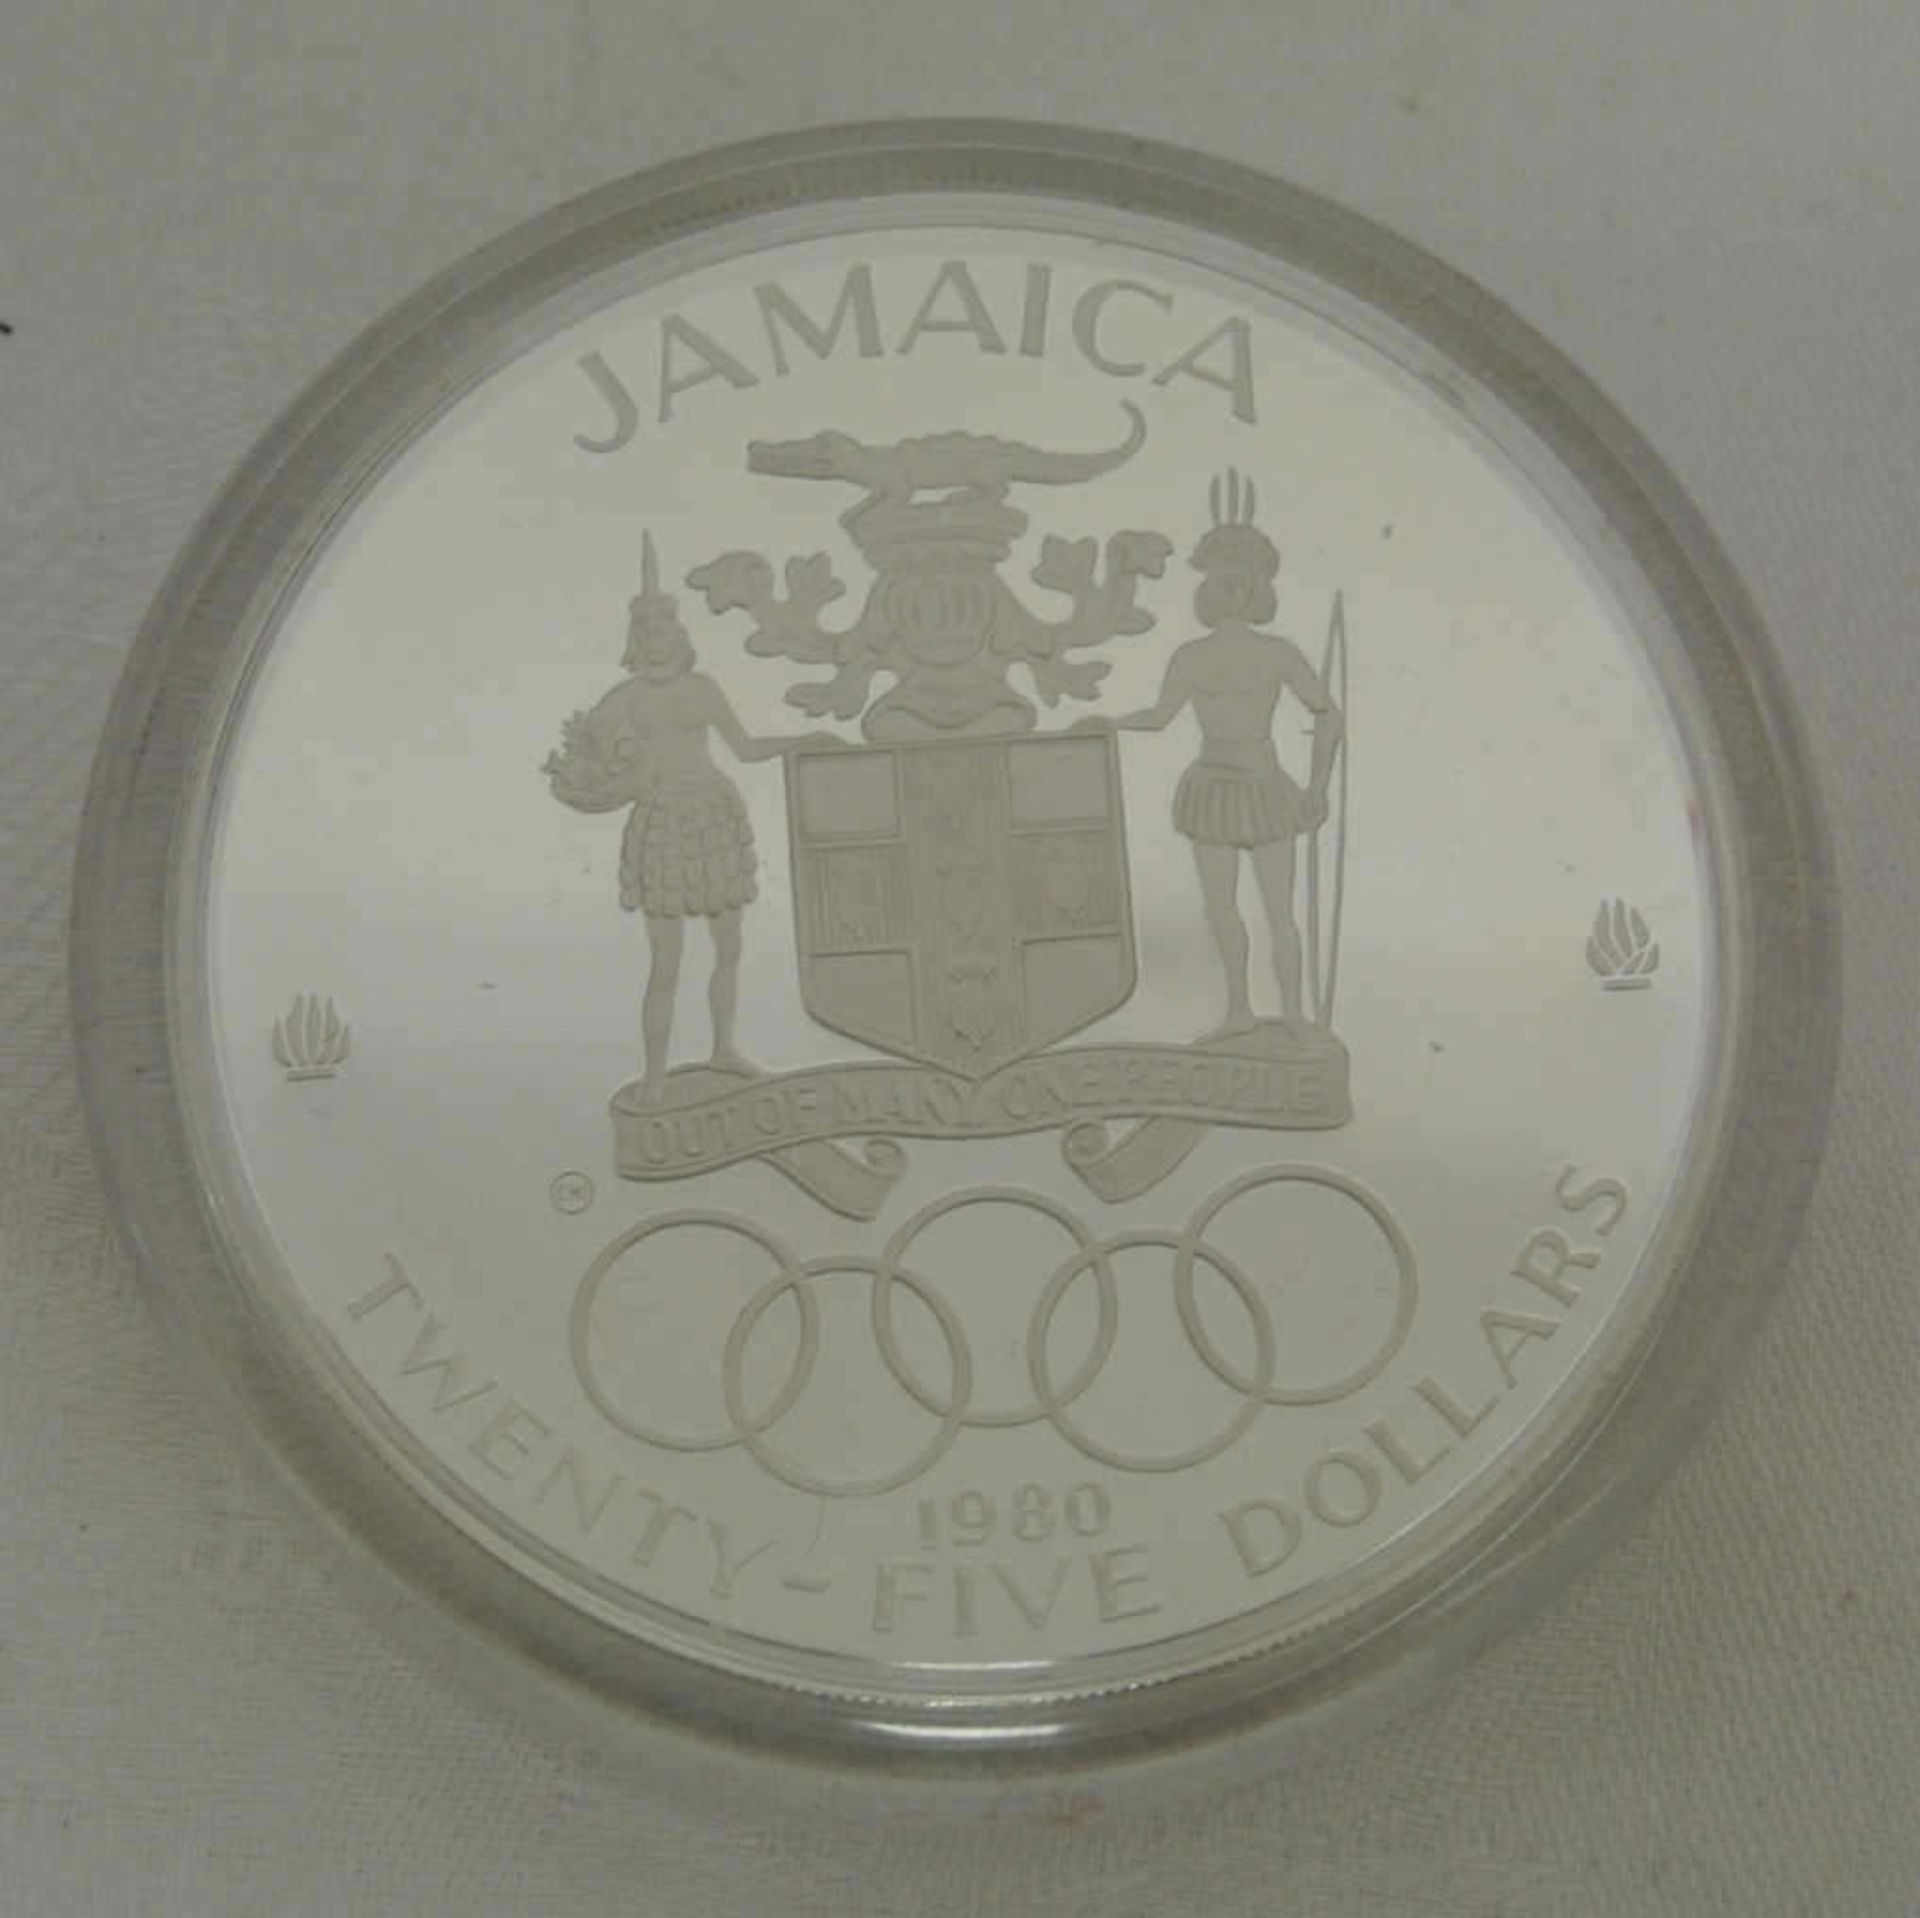 25 Dollar 1980, Jamaica Olympiade, Moskau 1980, Goldmedaillengewinner PP, in Original Schachtel - Image 2 of 3